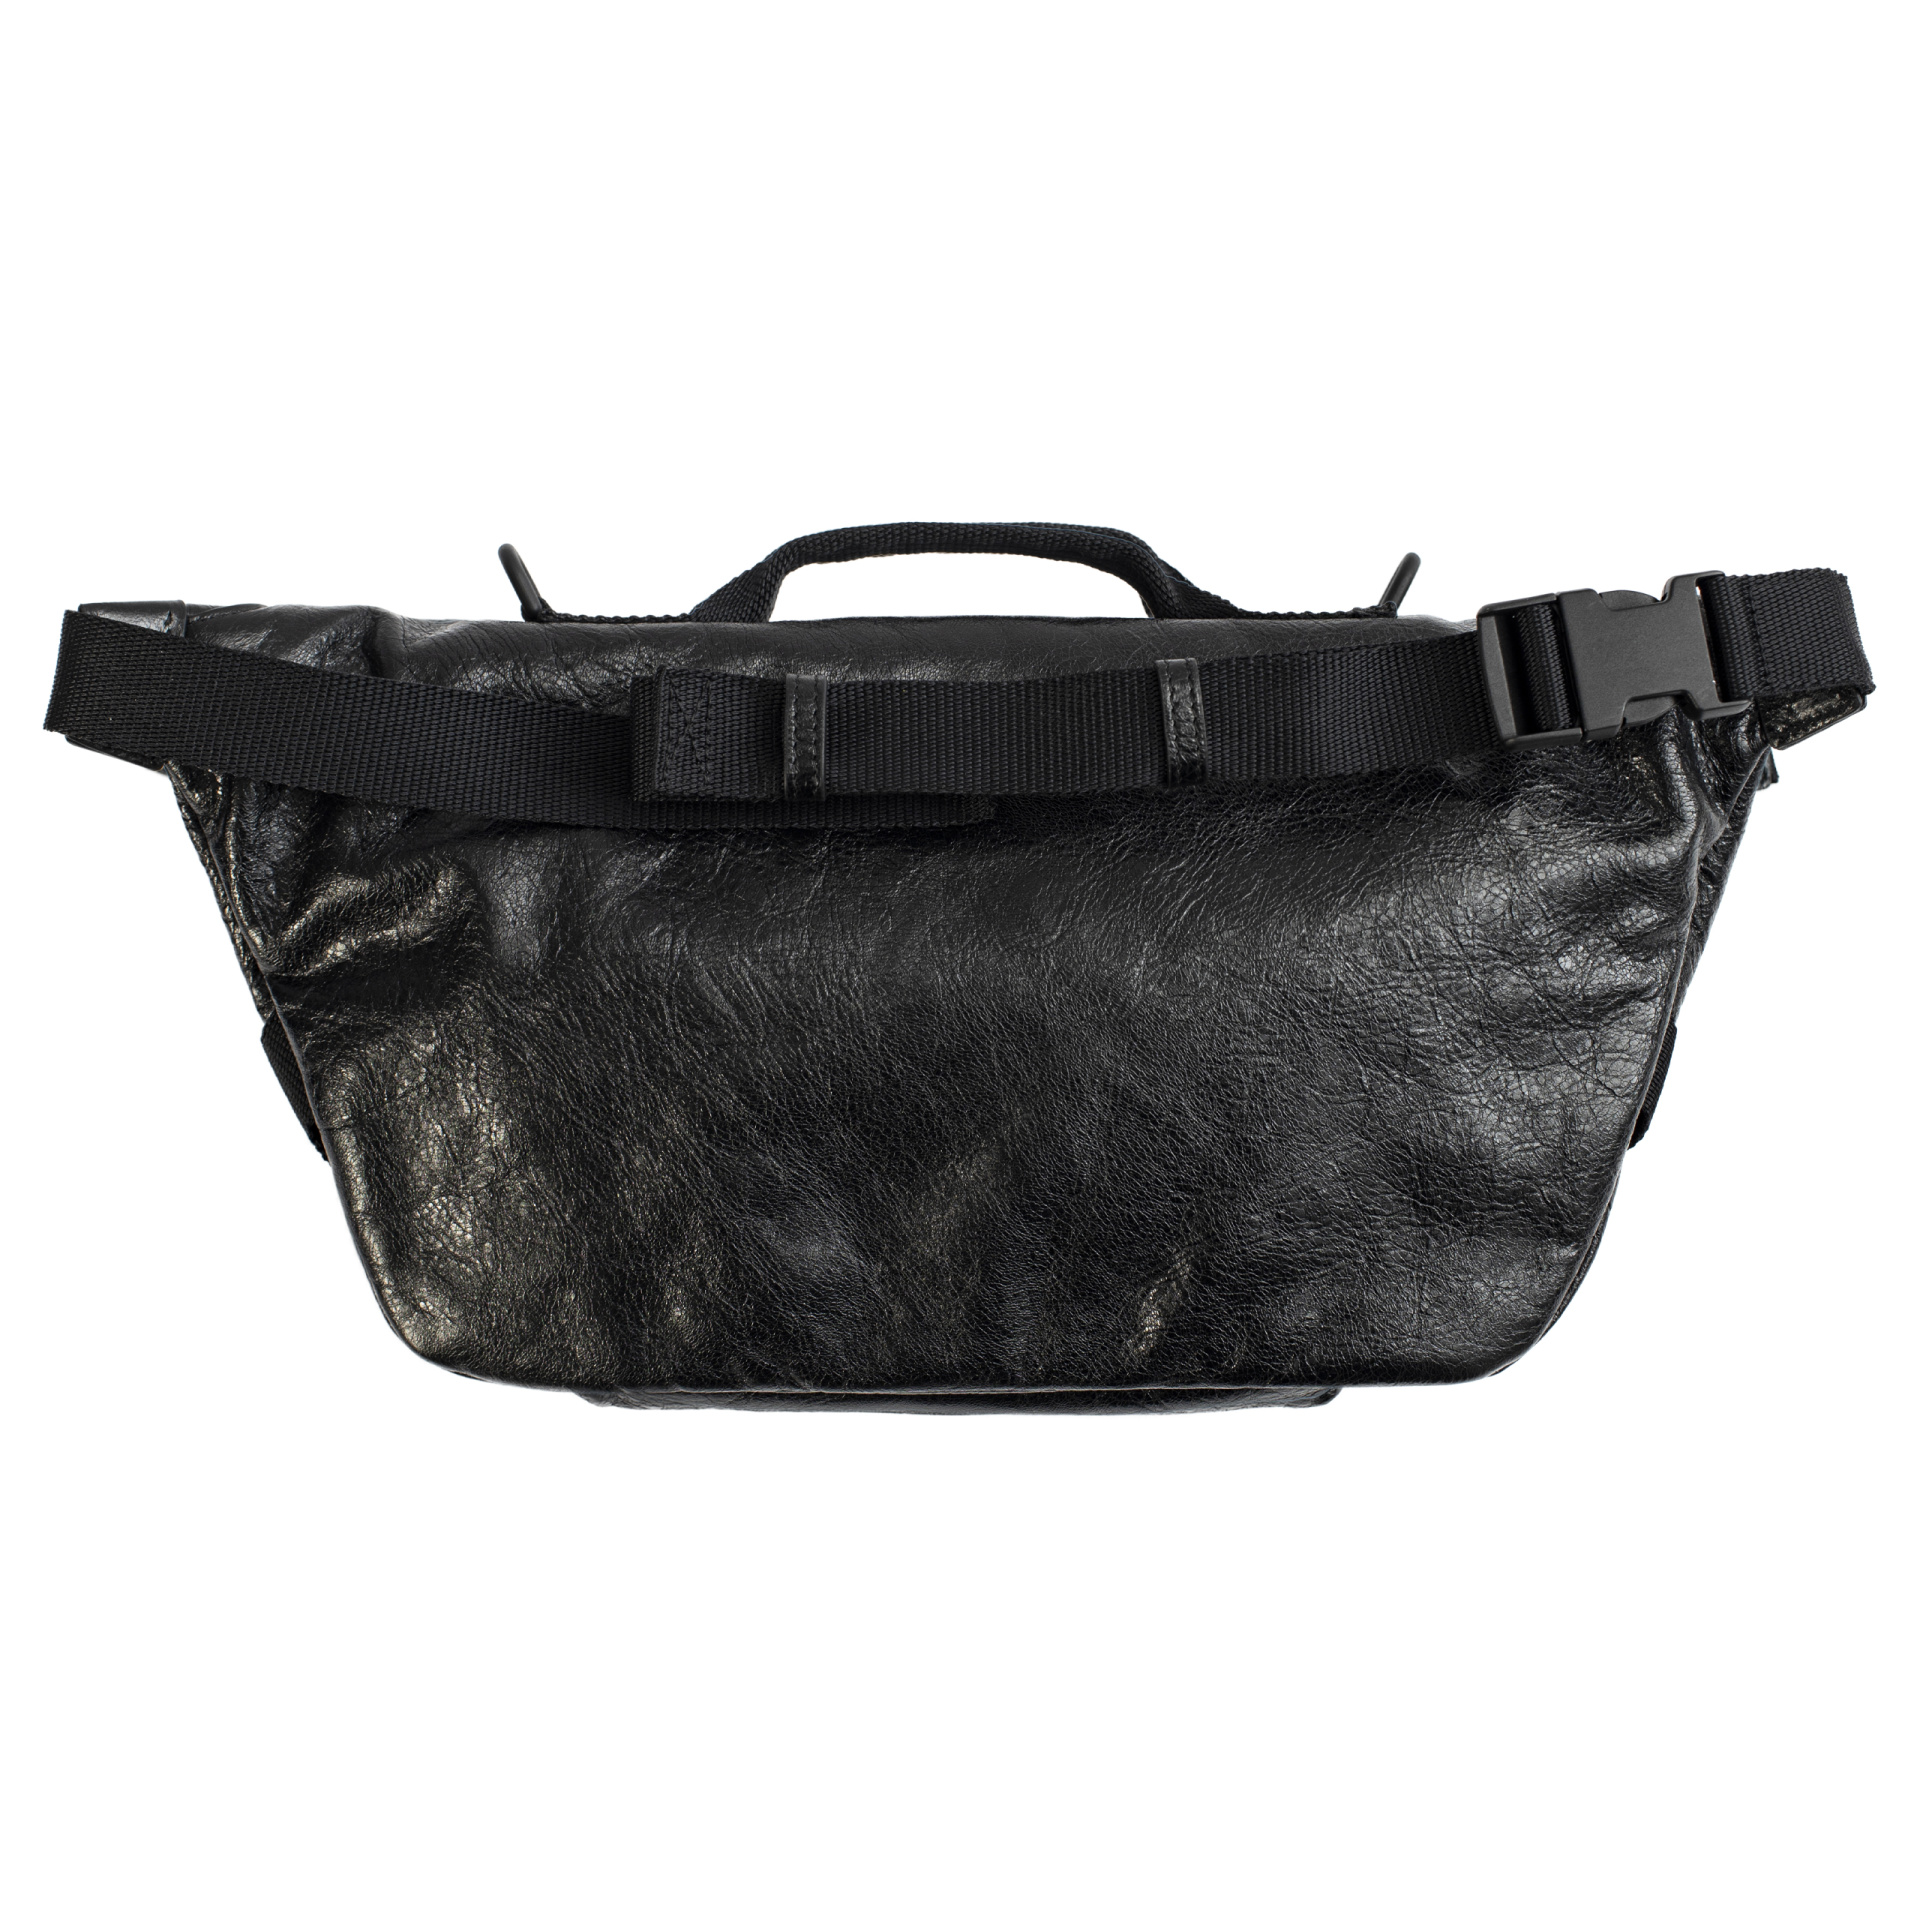 Balenciaga Army Large Beltbag in black